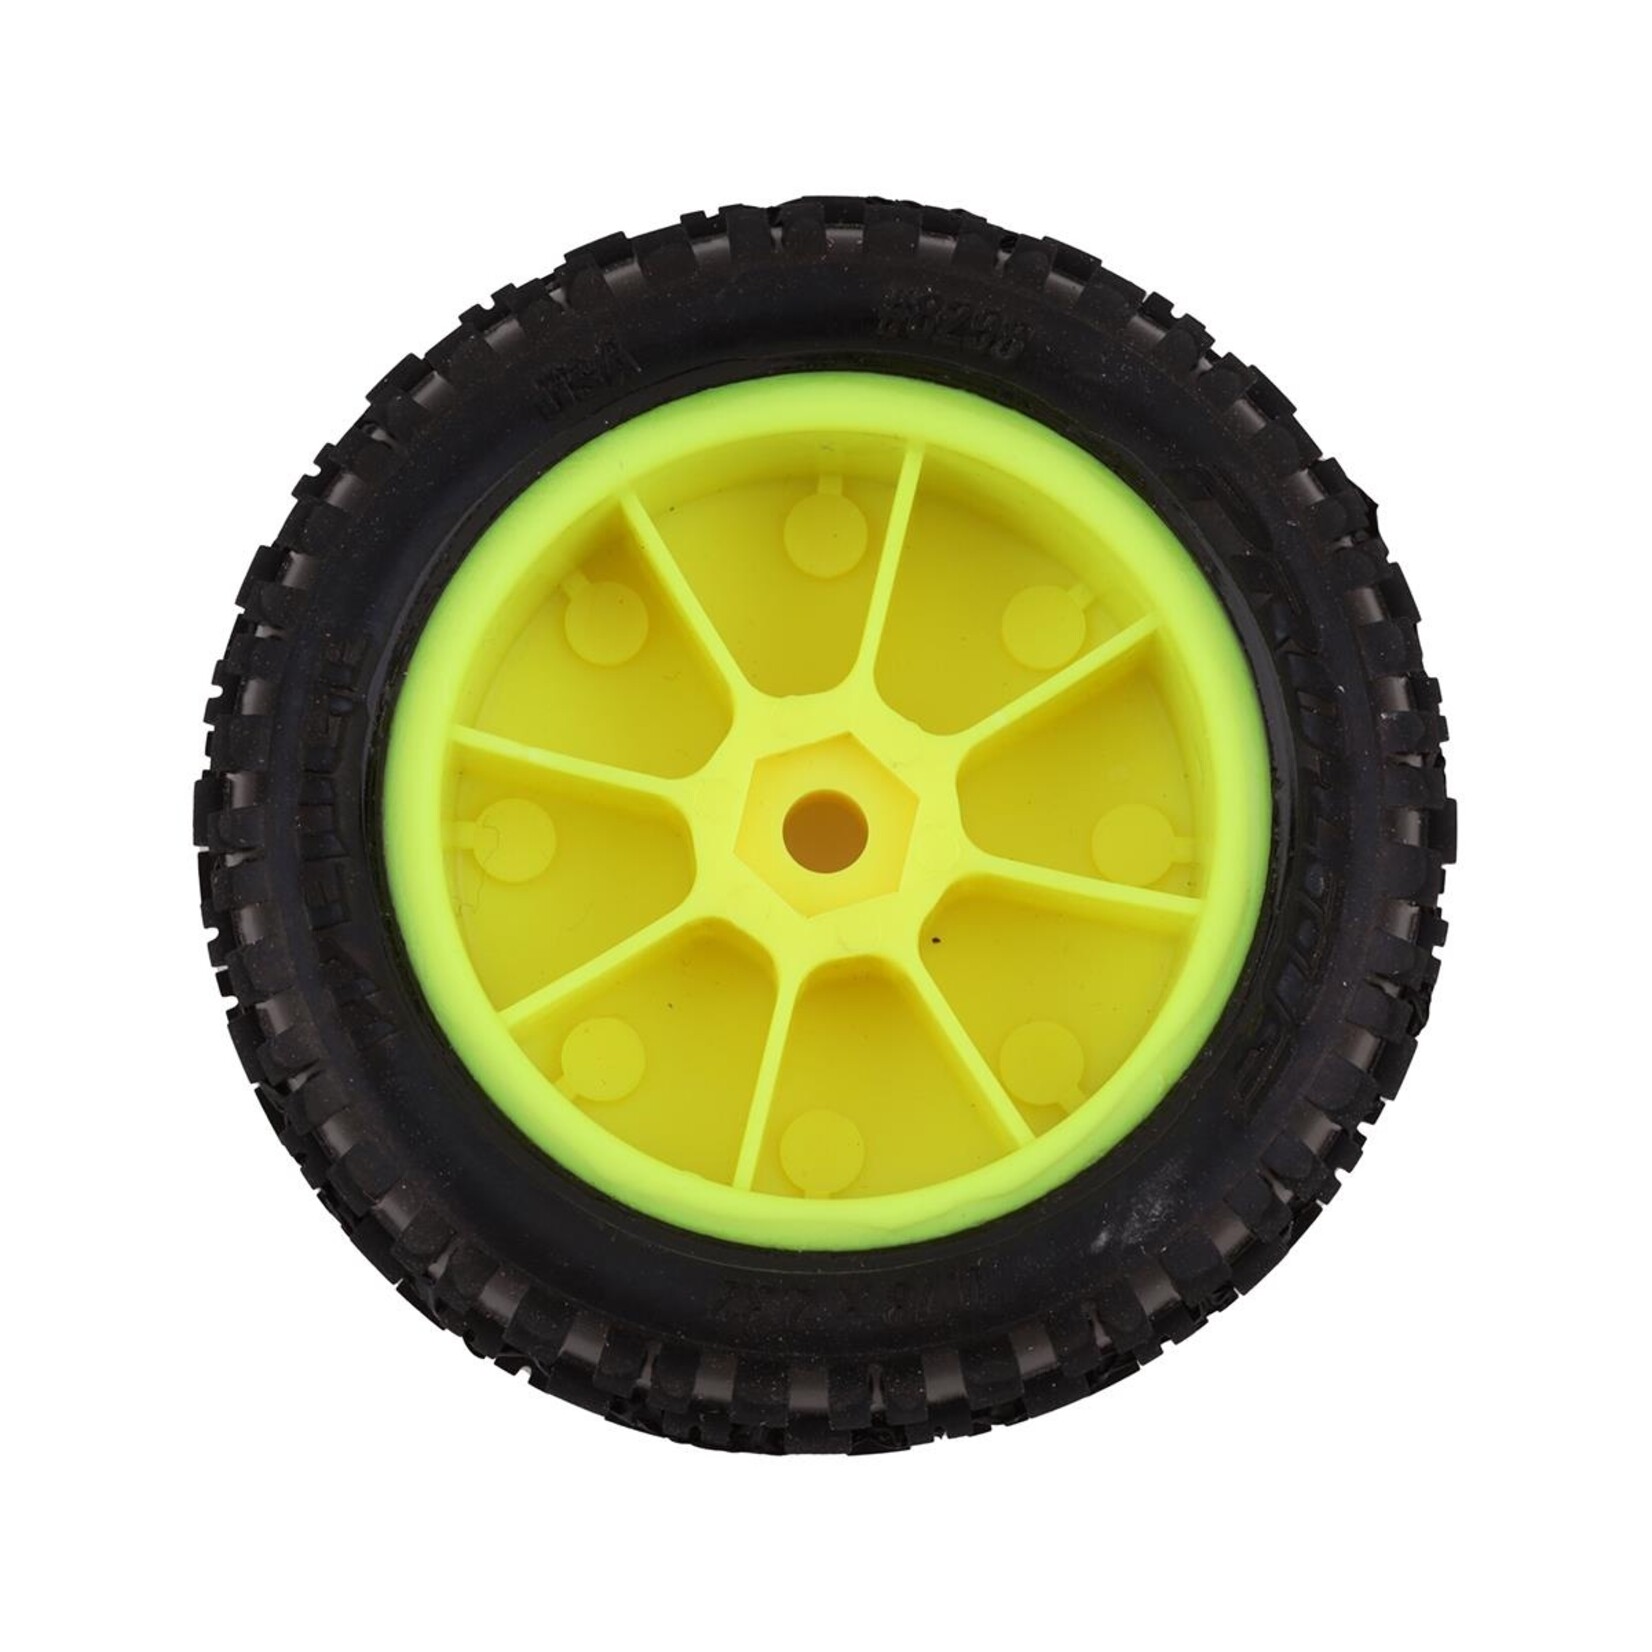 Pro-Line Pro-Line Mini-B Front Pre-Mounted Wedge Carpet Tire (Yellow) (2) (Z3) #8298-12